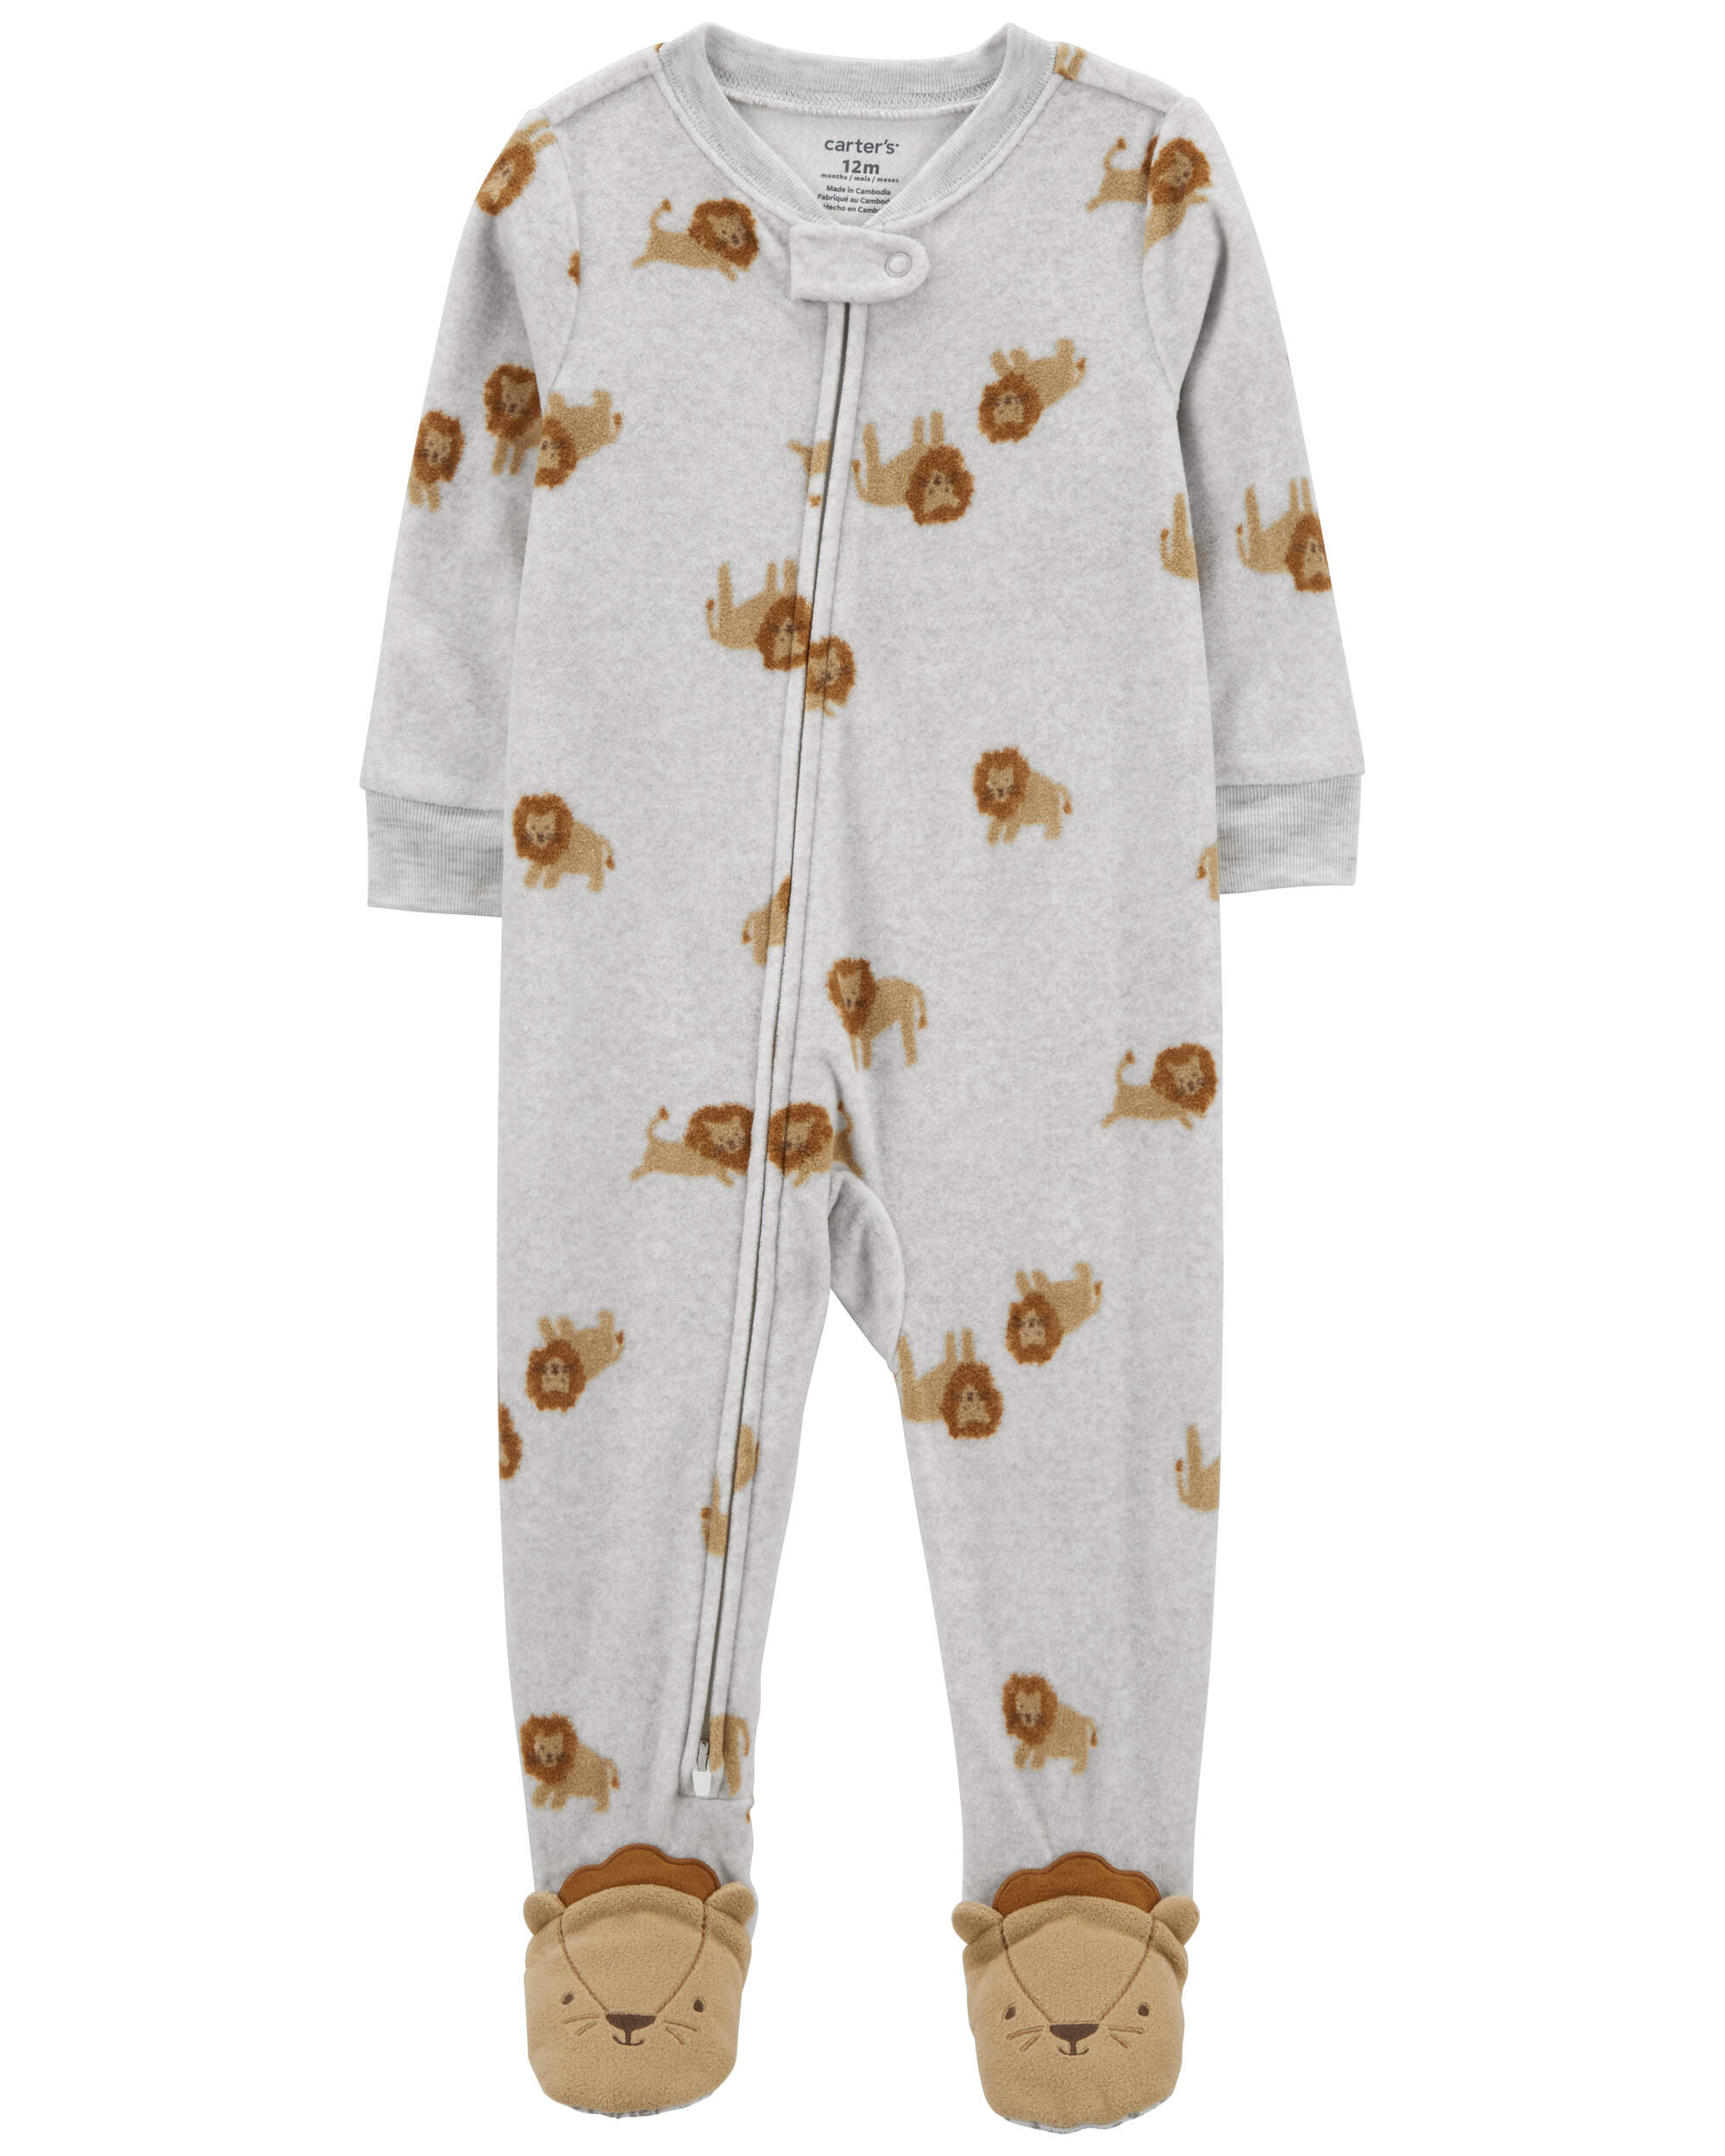 Toddler 1-Piece Lion Fleece Footie Pyjamas